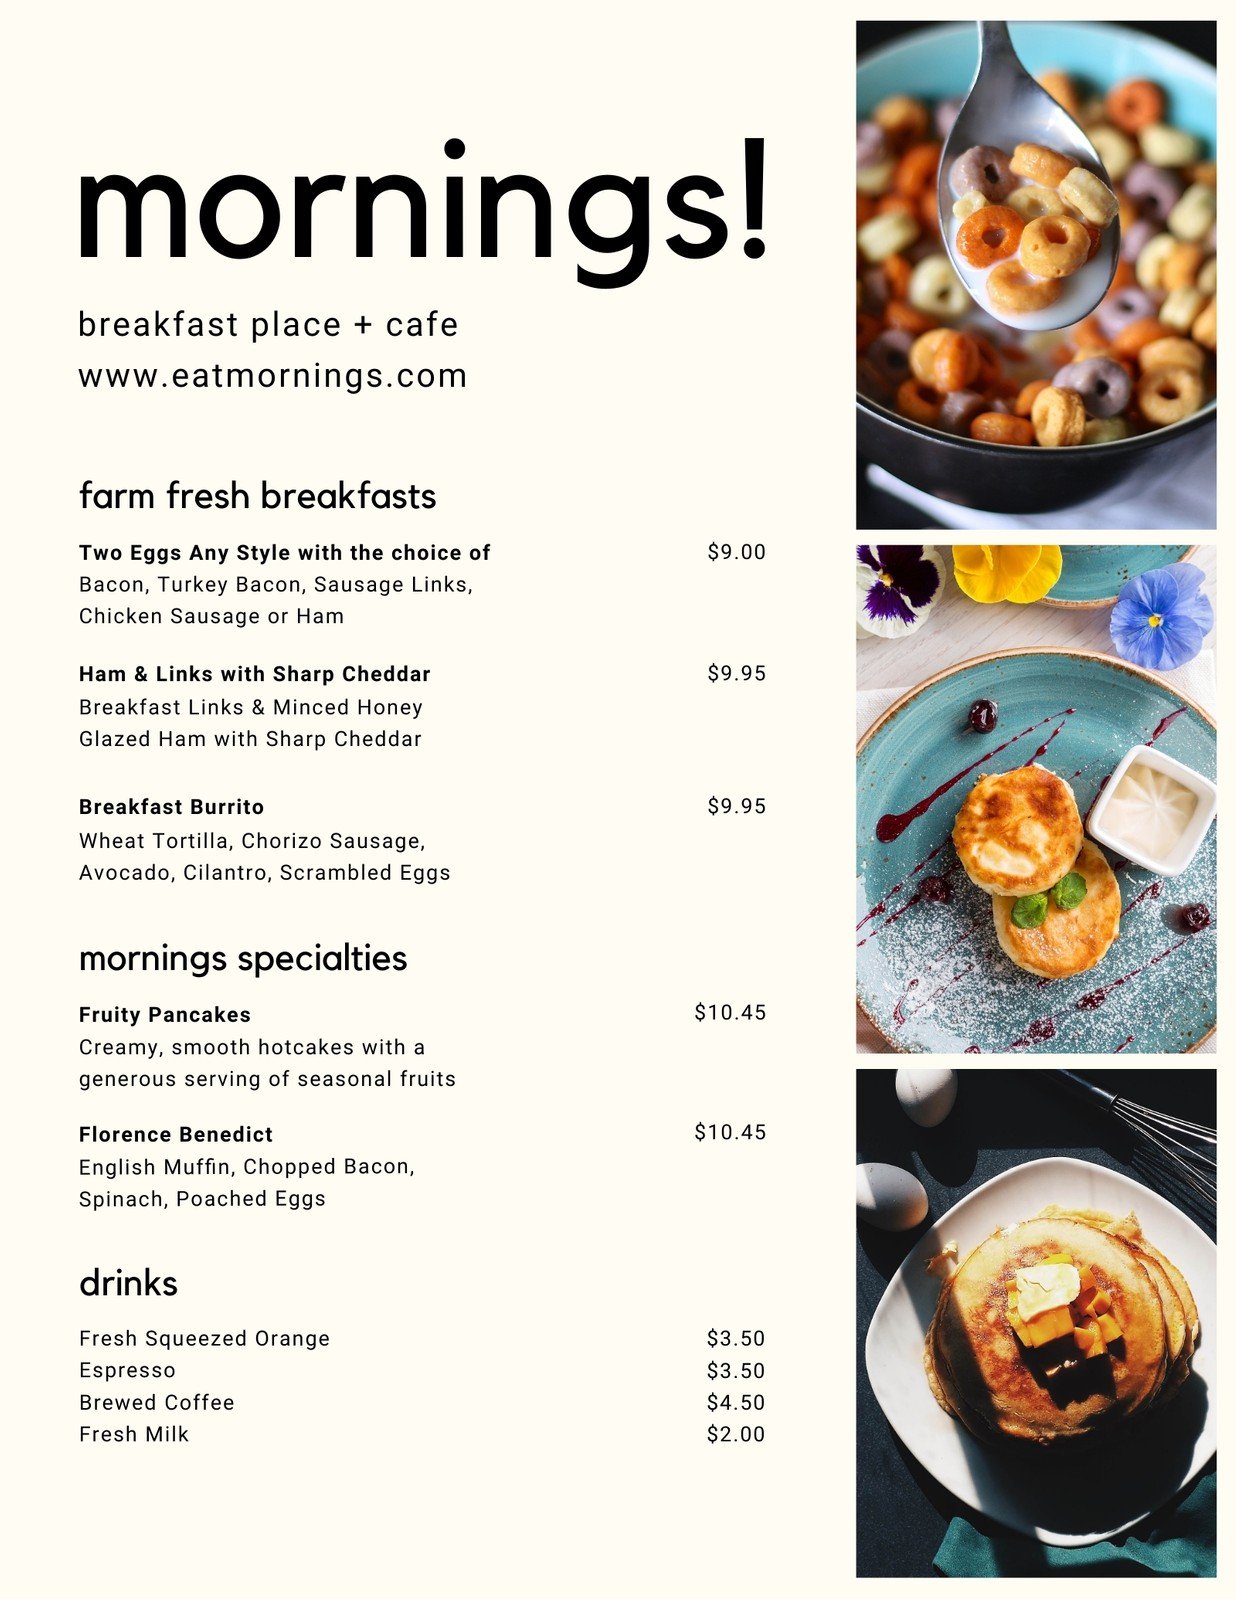 Free, custom printable breakfast menu templates  Canva For Breakfast Menu Template Word